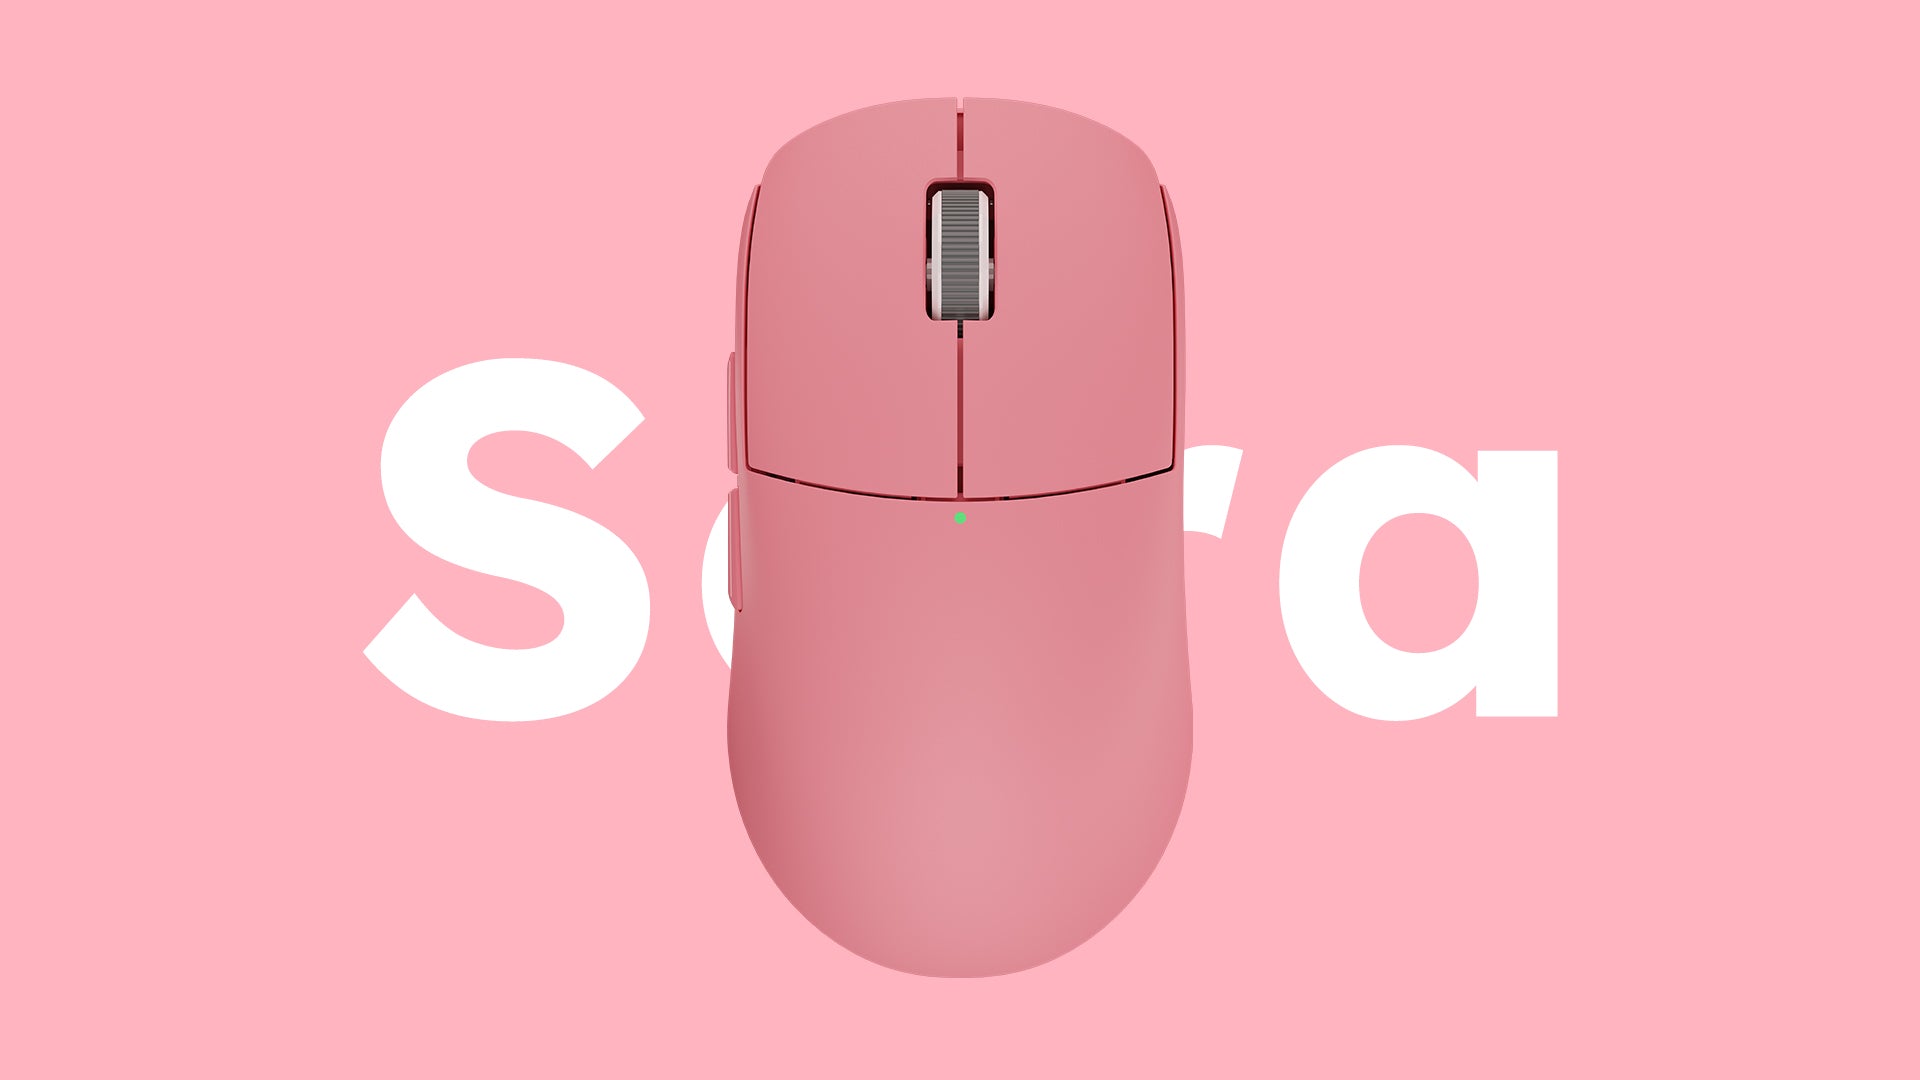 Ninjutso Sora Wireless Gaming Mouse